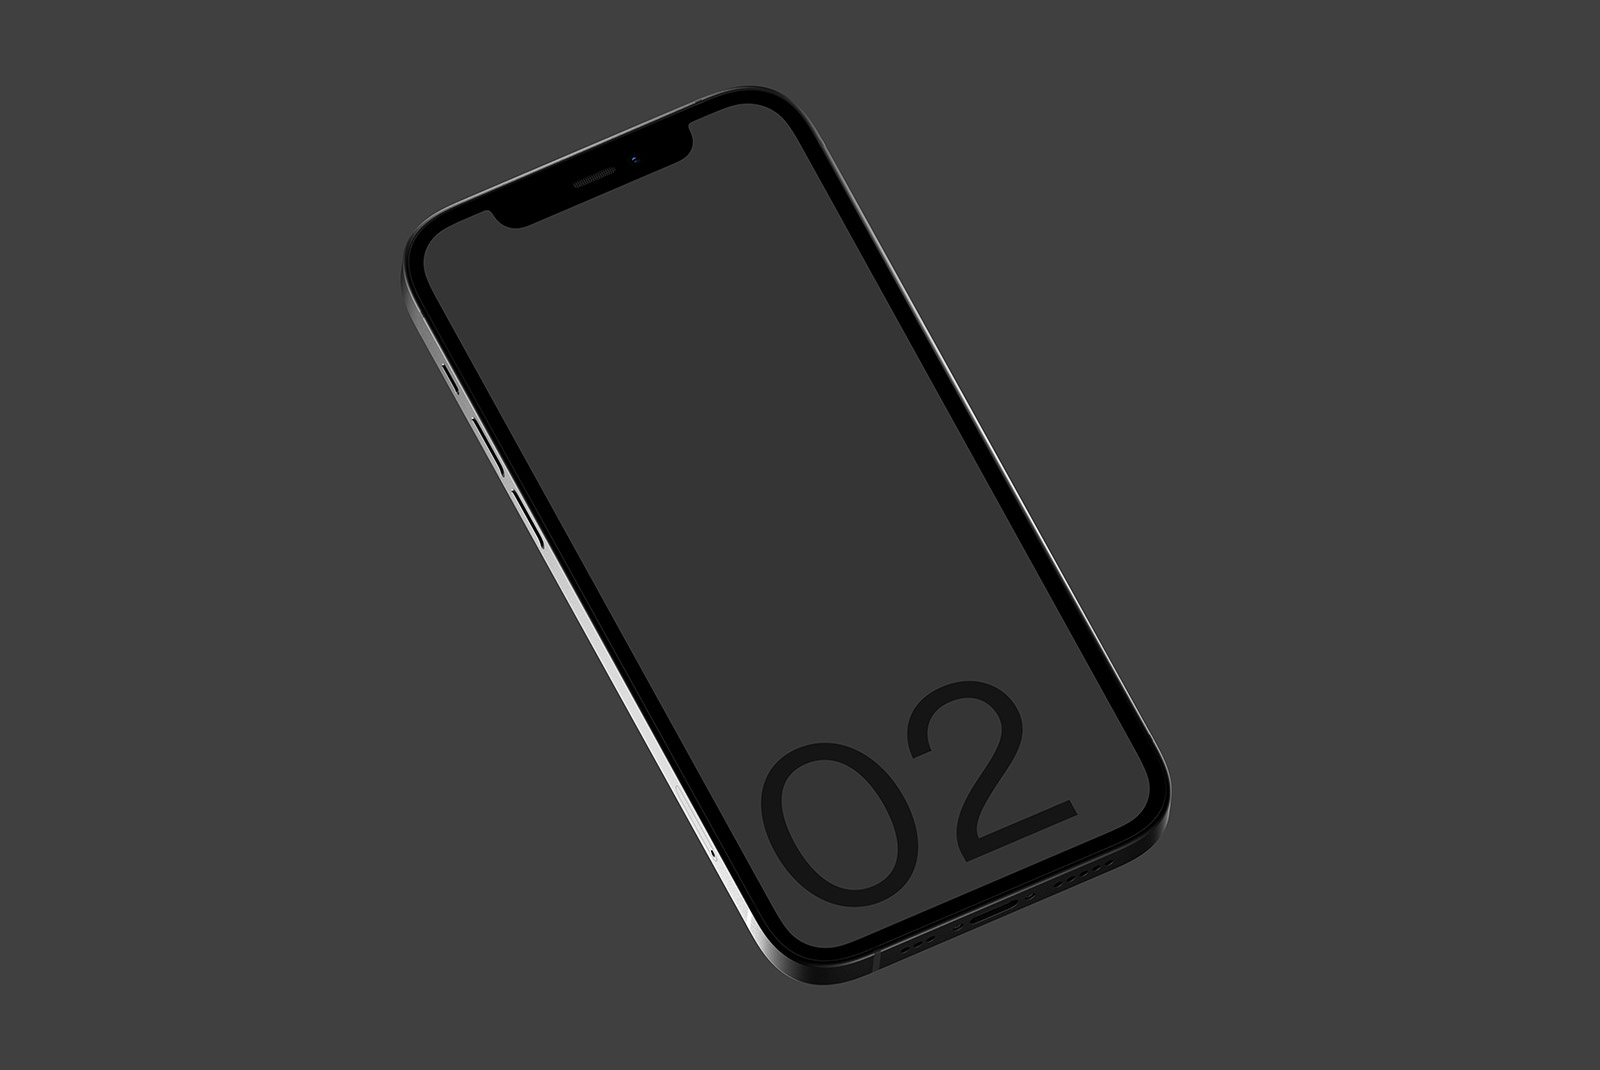 Smartphone mockup with blank screen on dark background for app design presentation, digital asset for graphic designers.